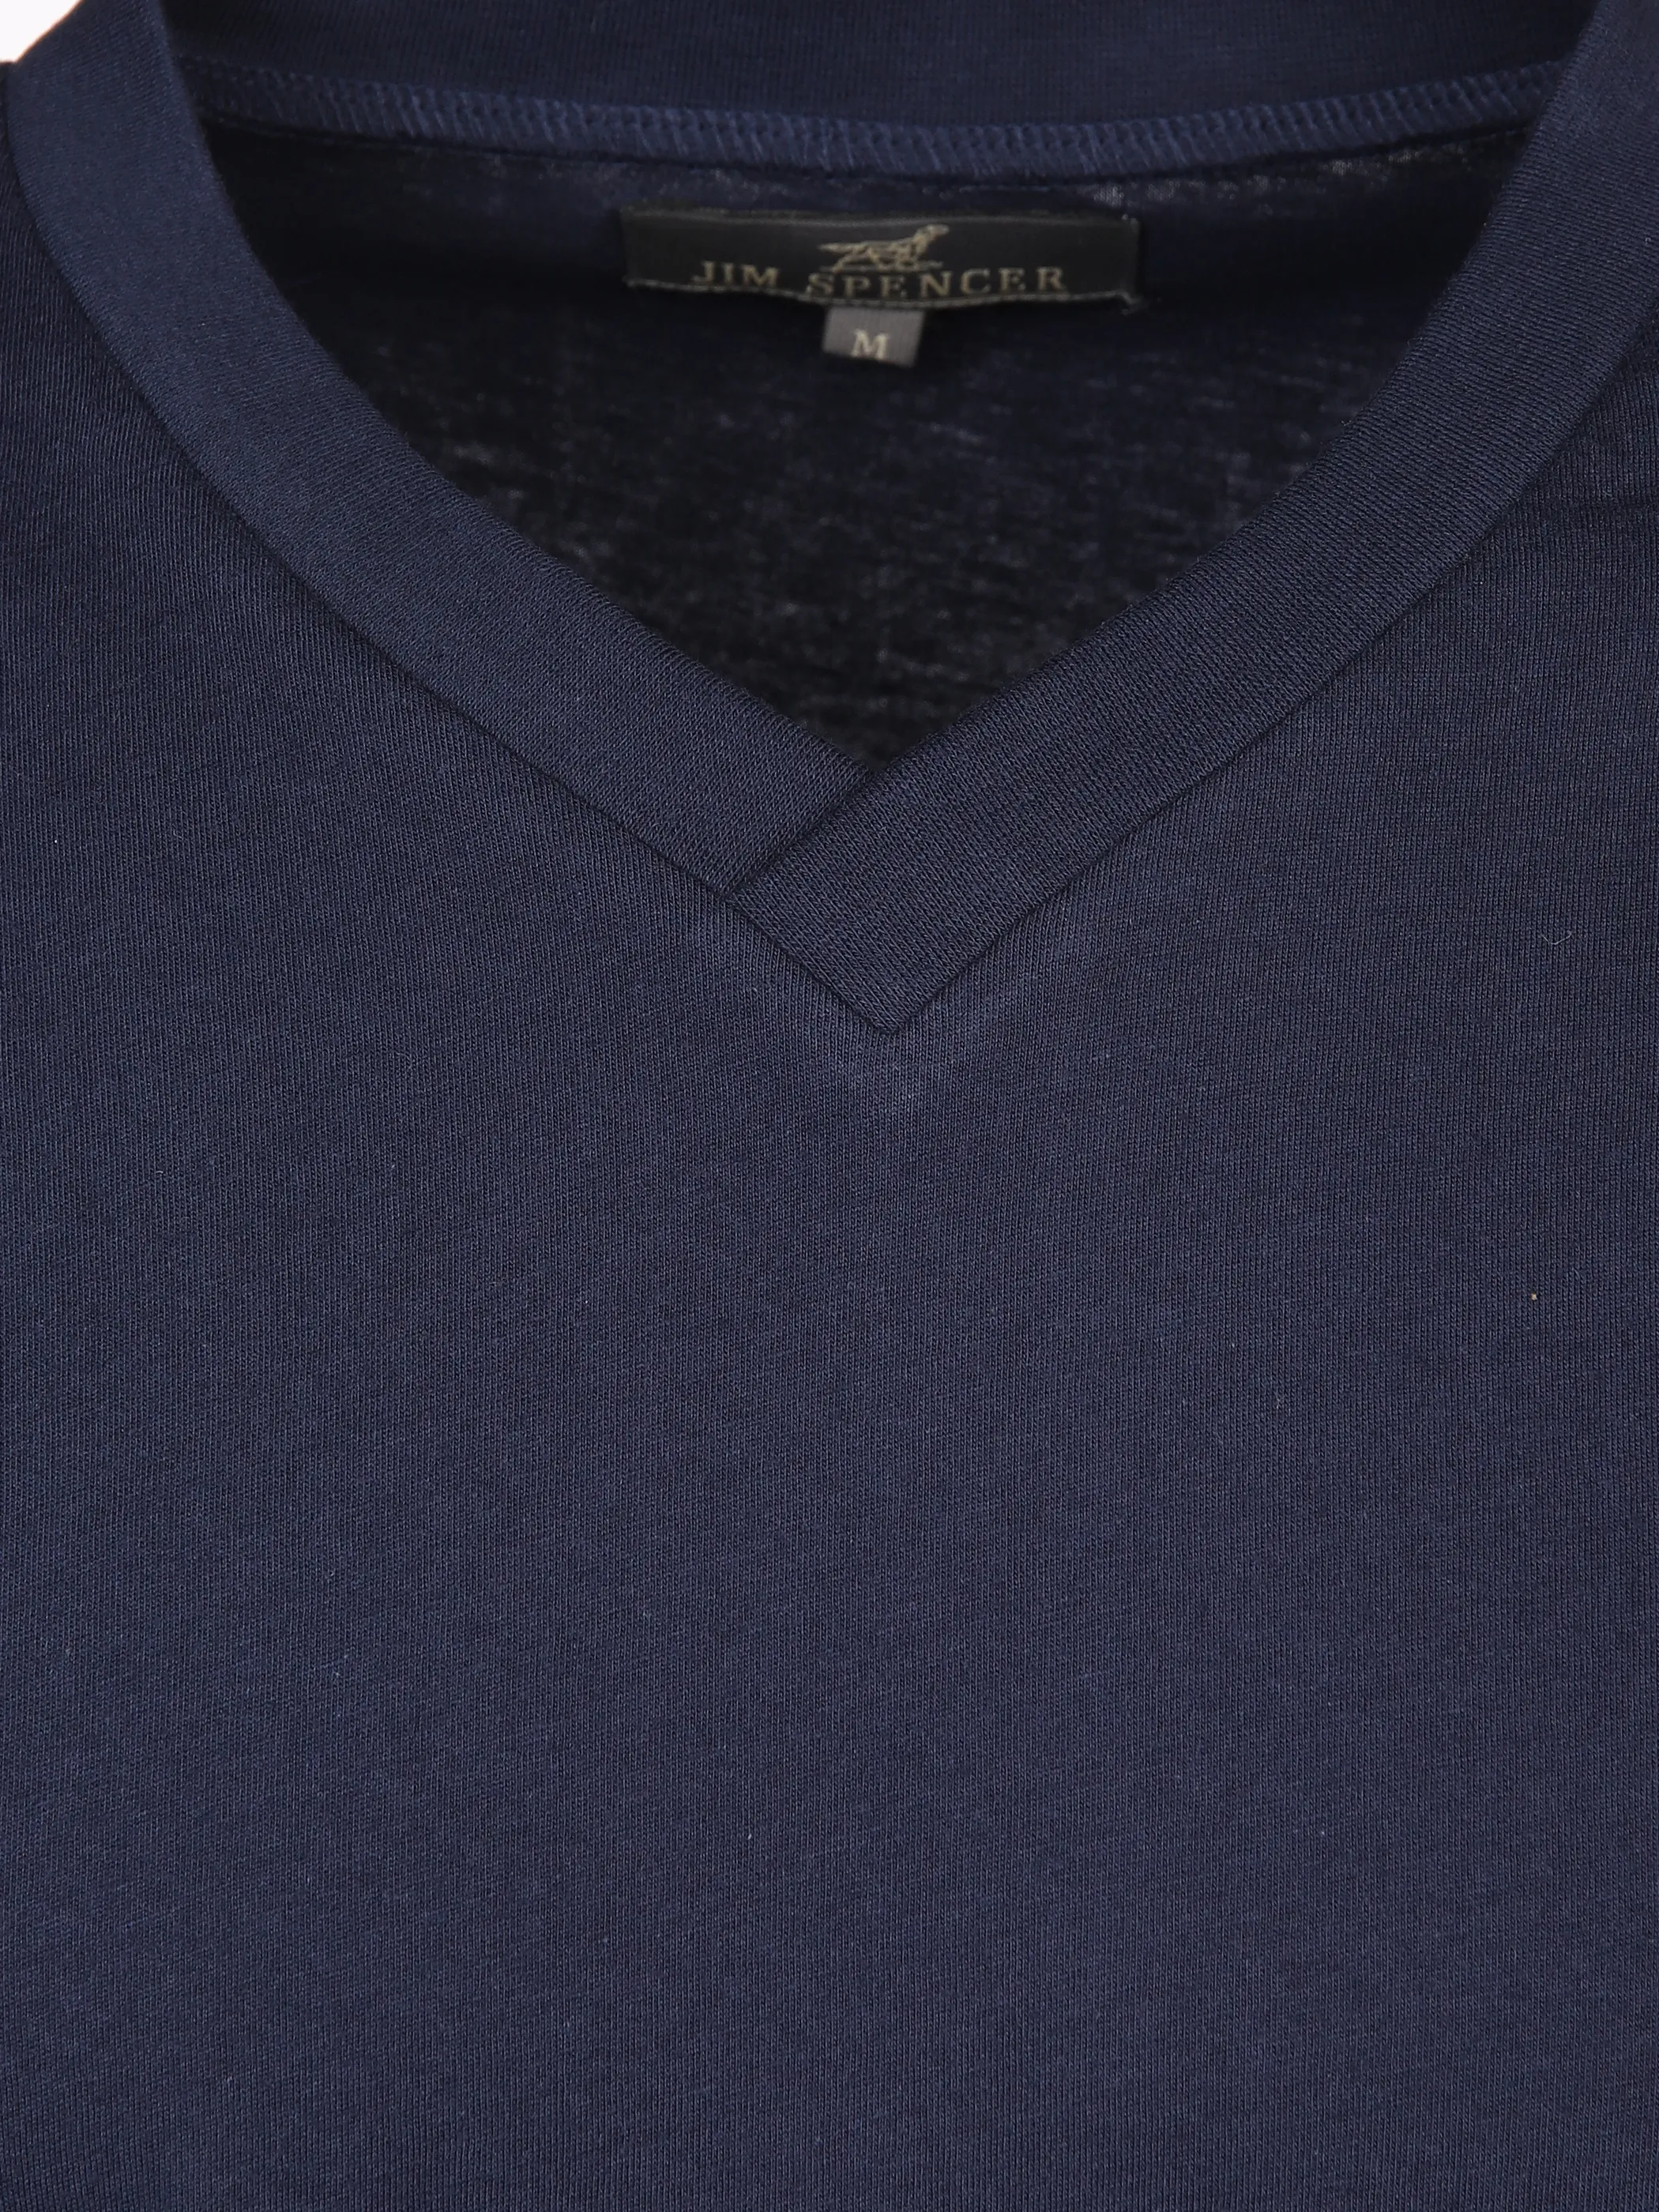 Jim Spencer He. Pyjama Shirt 1/2 Arm + Ber Blau 889139 NA/GR/RO 3